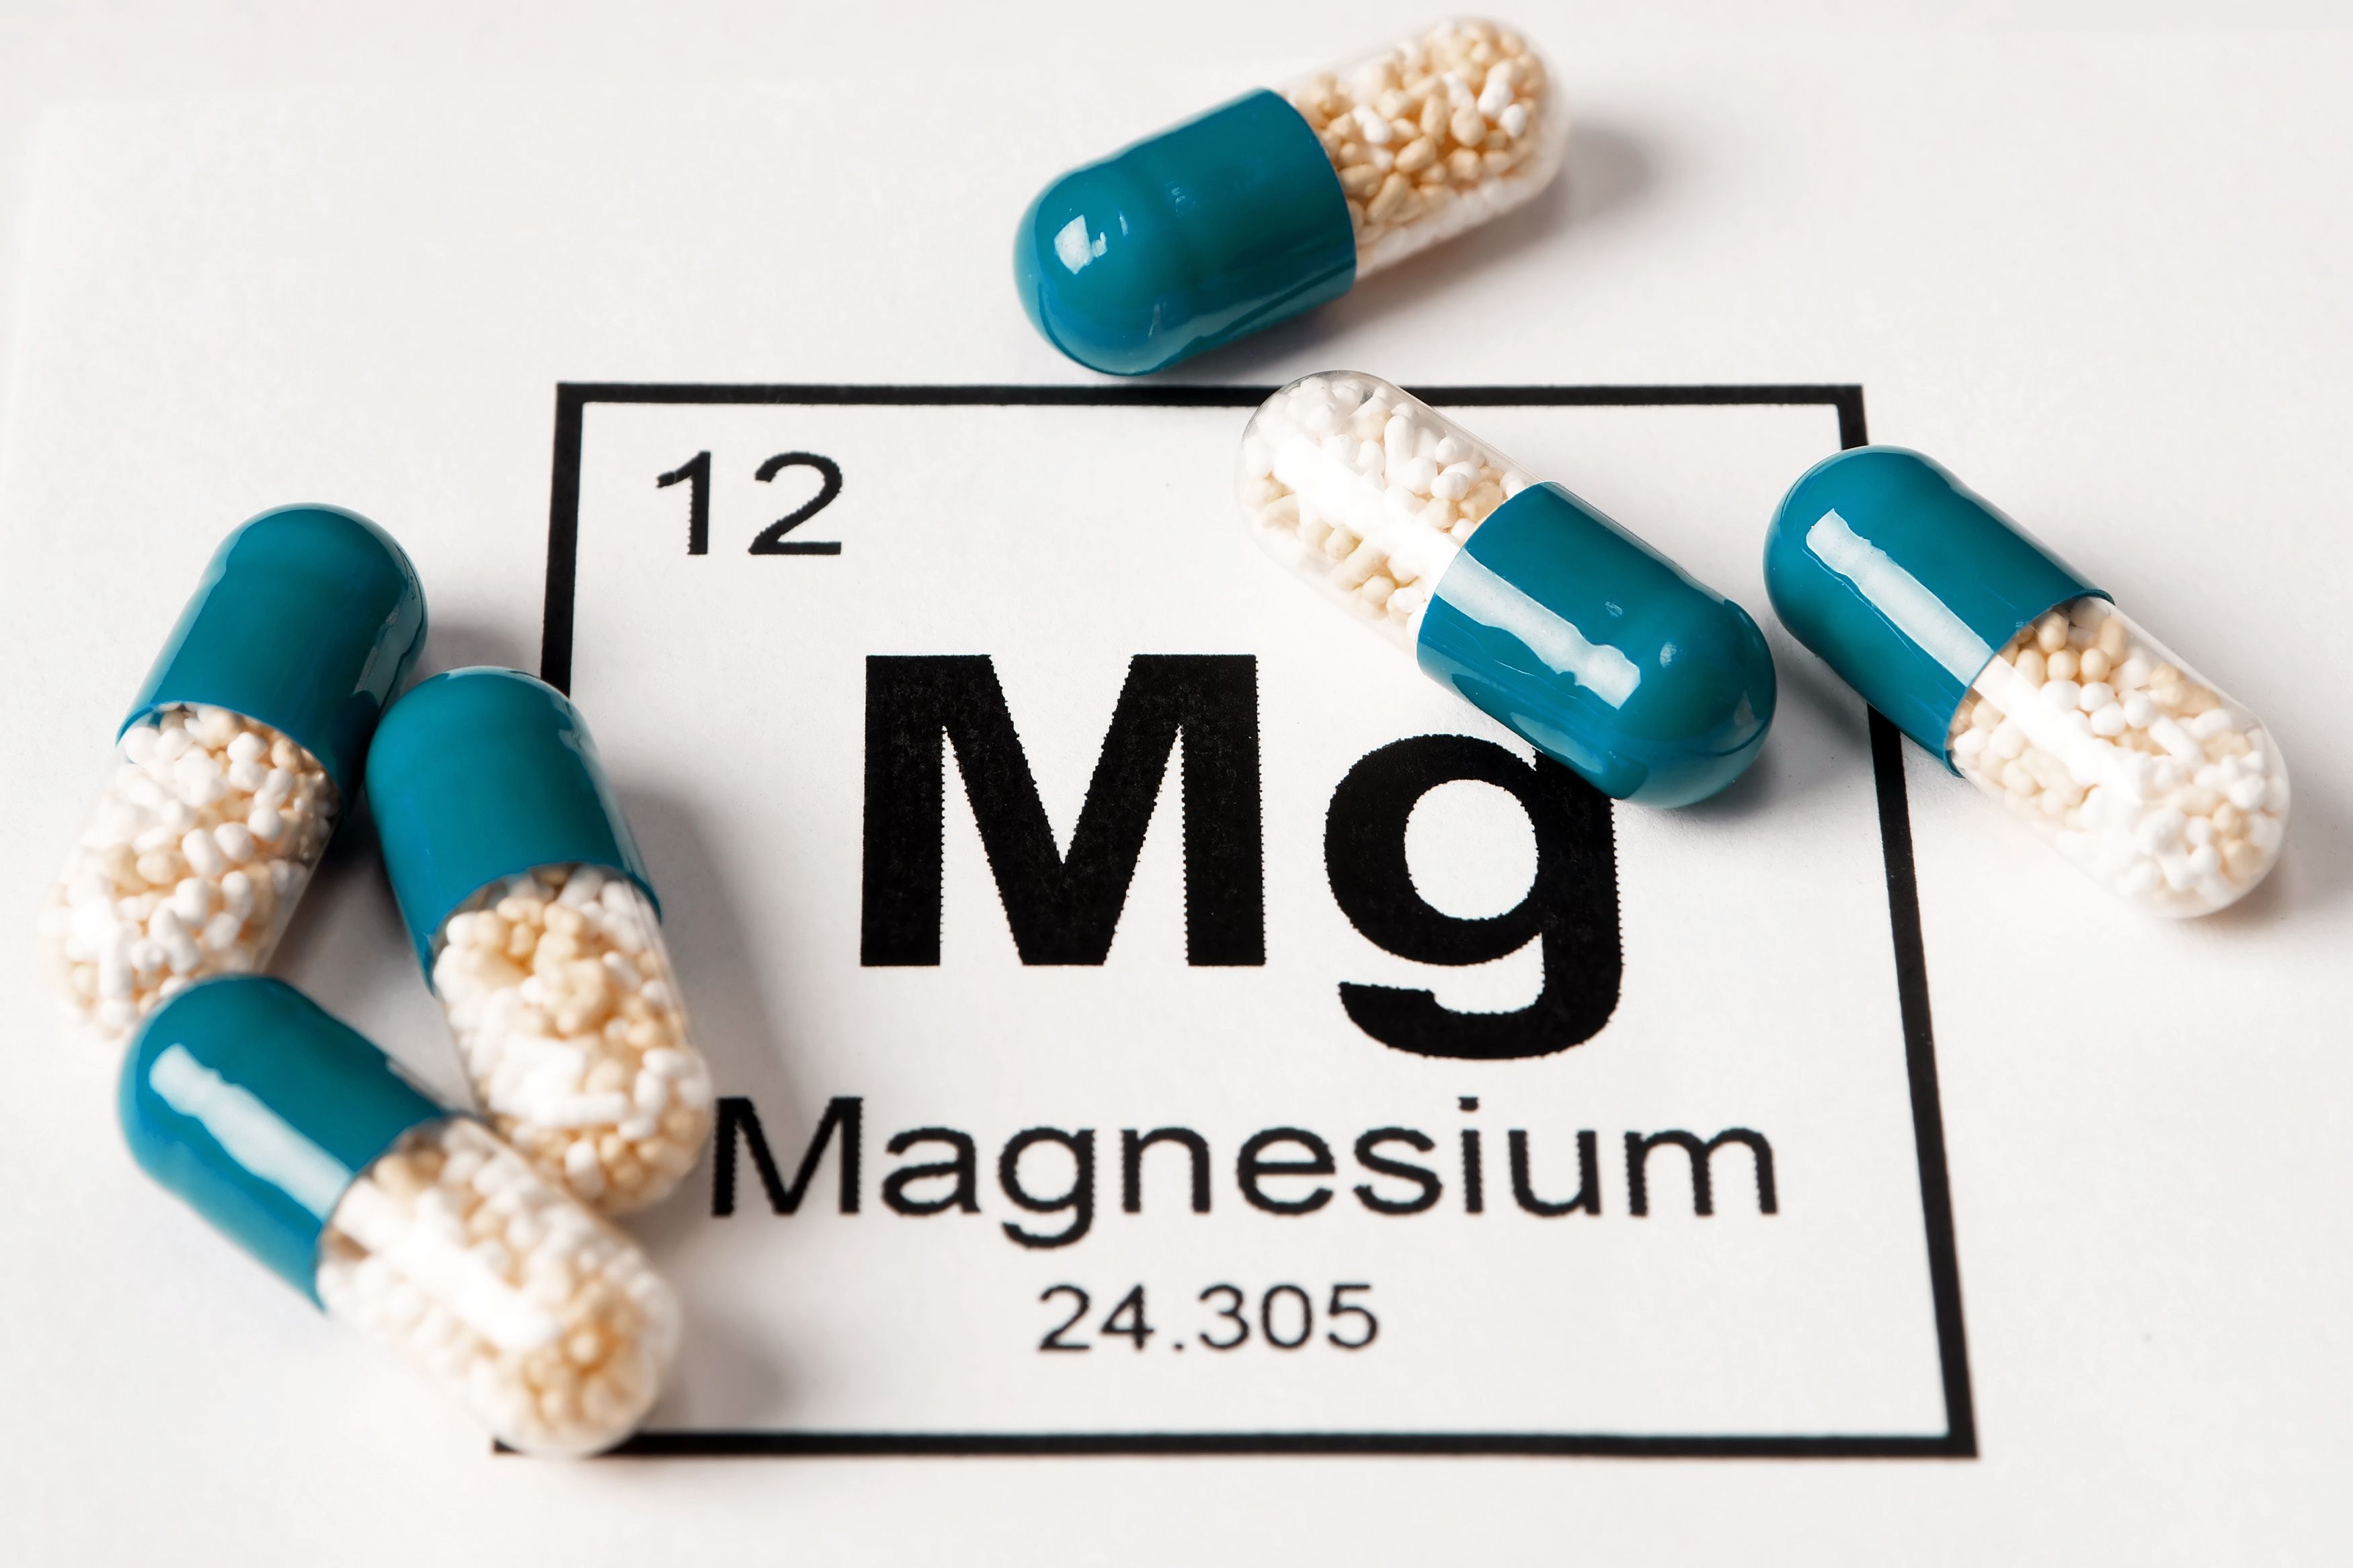 Magnesium pills | Image Credit: Dmitriy - stock.adobe.com